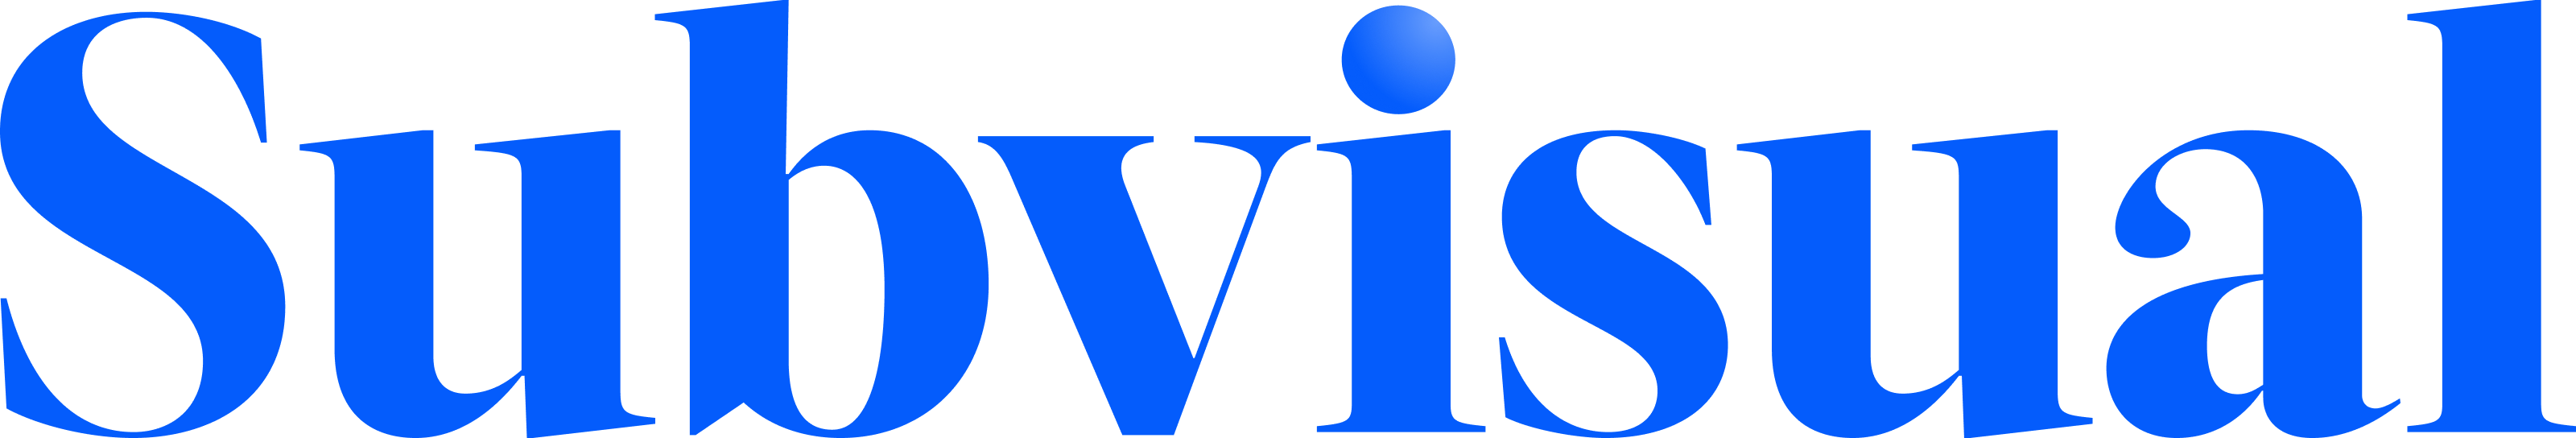 Subvisual logo